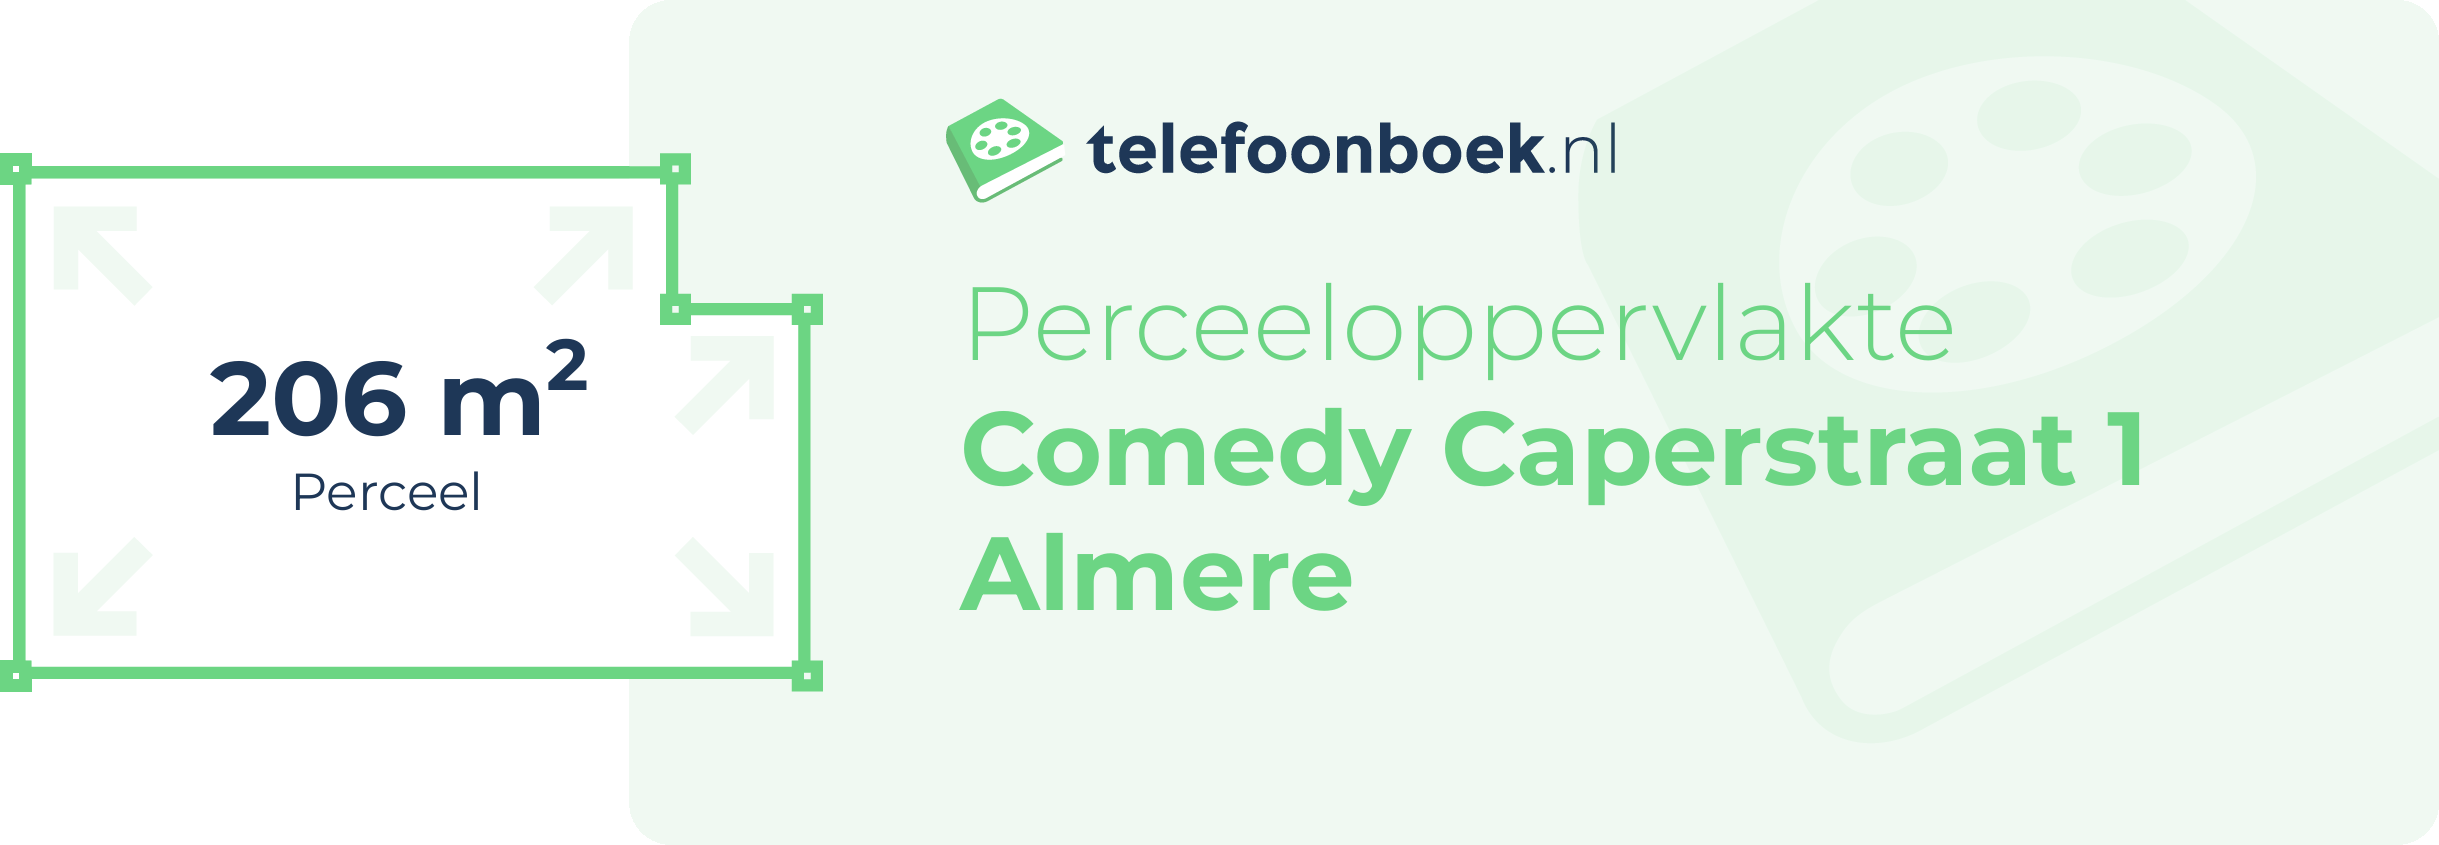 Perceeloppervlakte Comedy Caperstraat 1 Almere